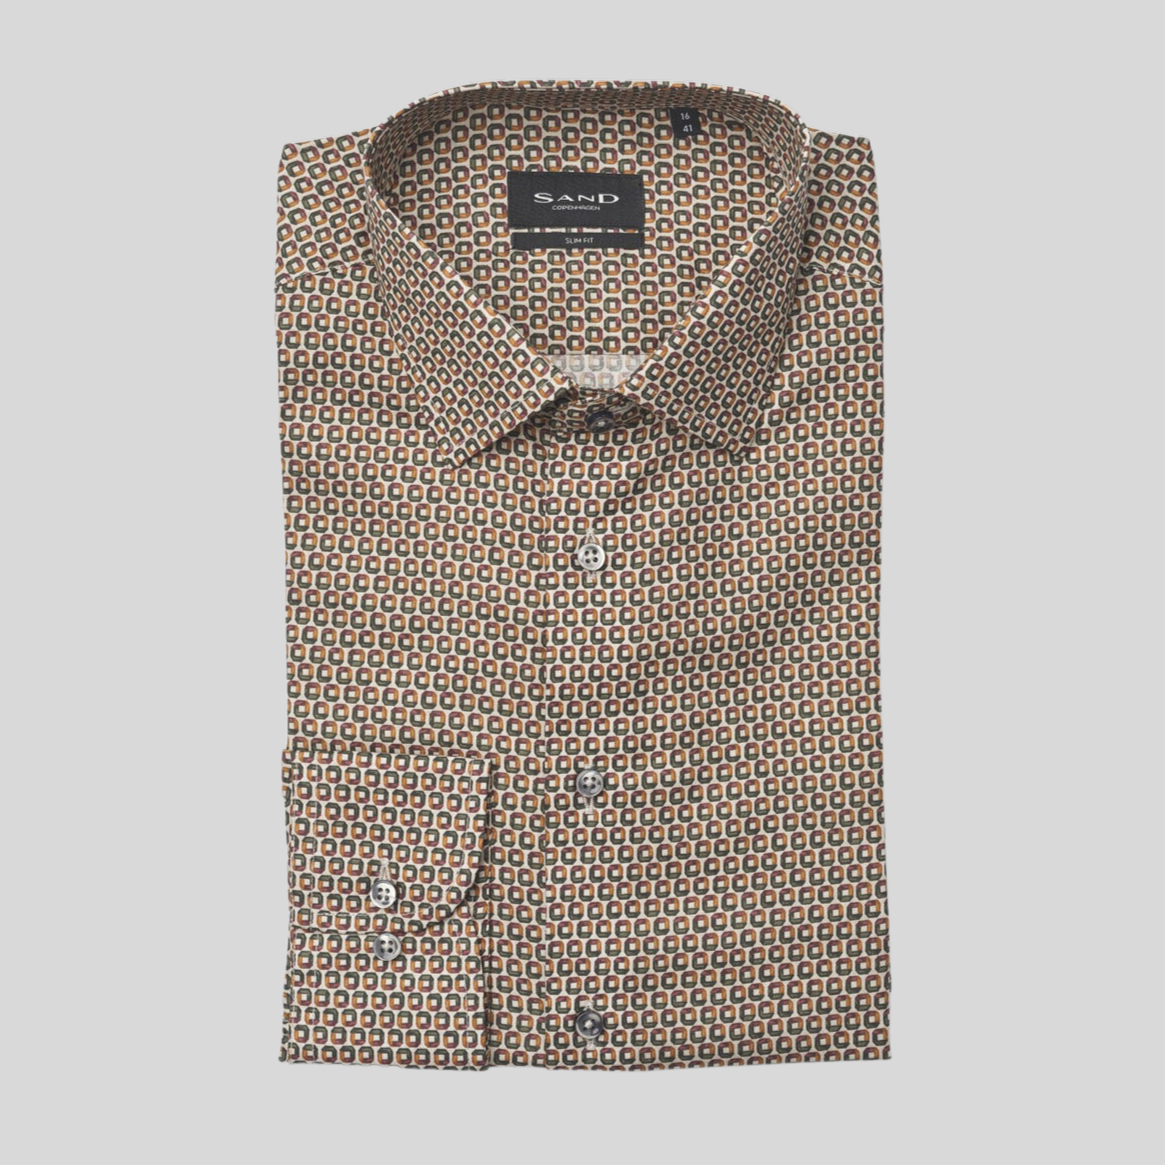 Gotstyle Fashion - Sand Collar Shirts 70s Geo Print Soft Cotton Twill Shirt - Brown